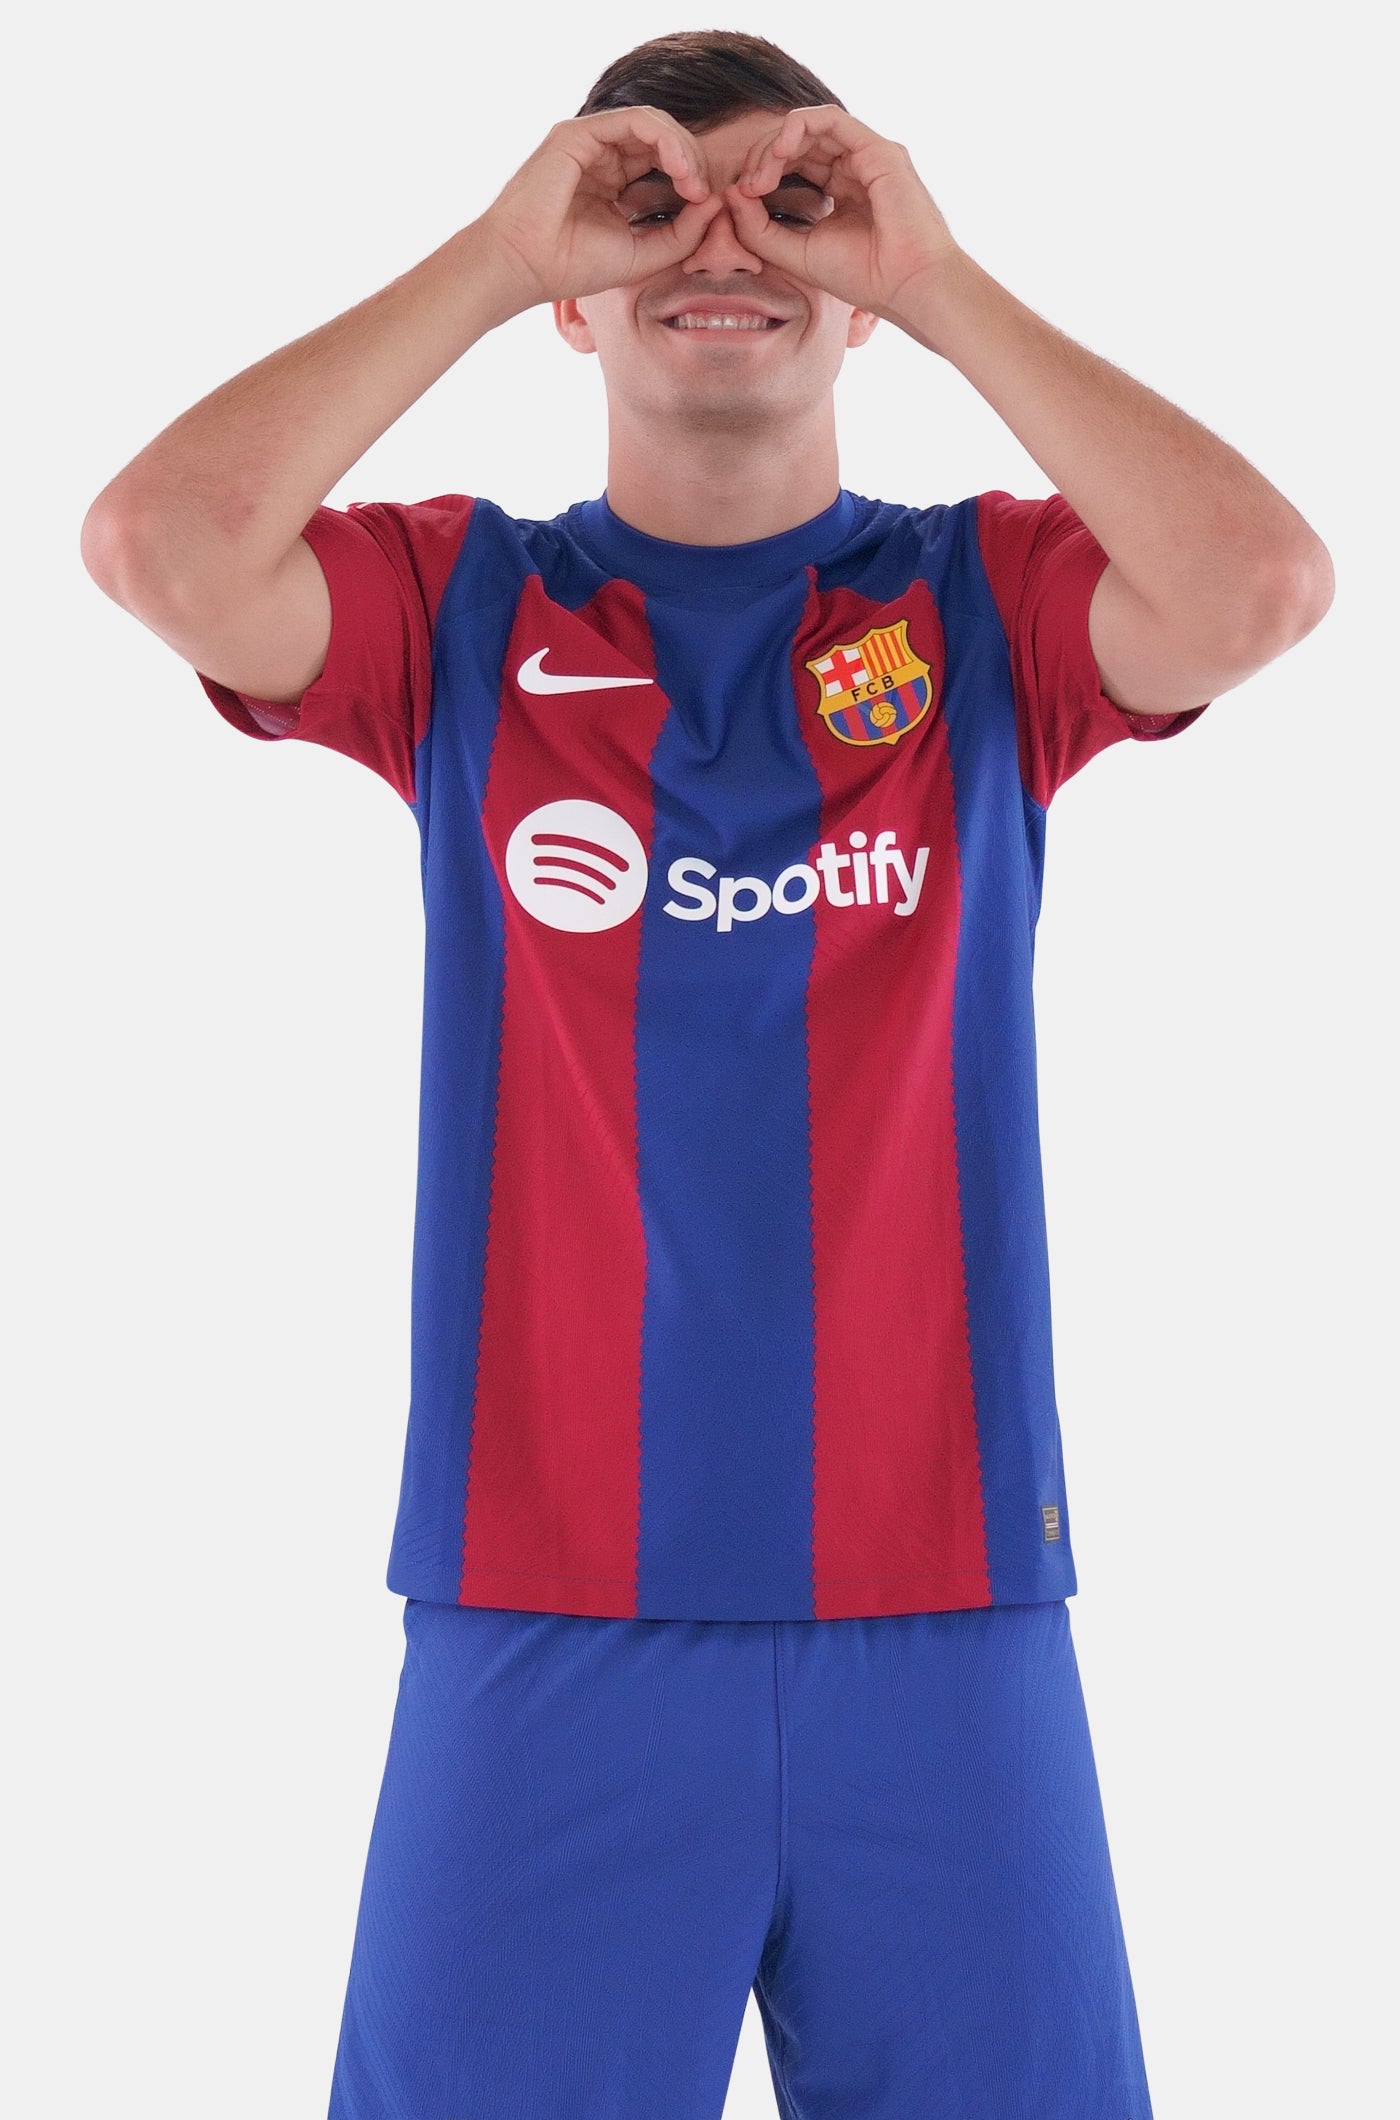 Sudadera amarilla Barça Nike – Barça Official Store Spotify Camp Nou